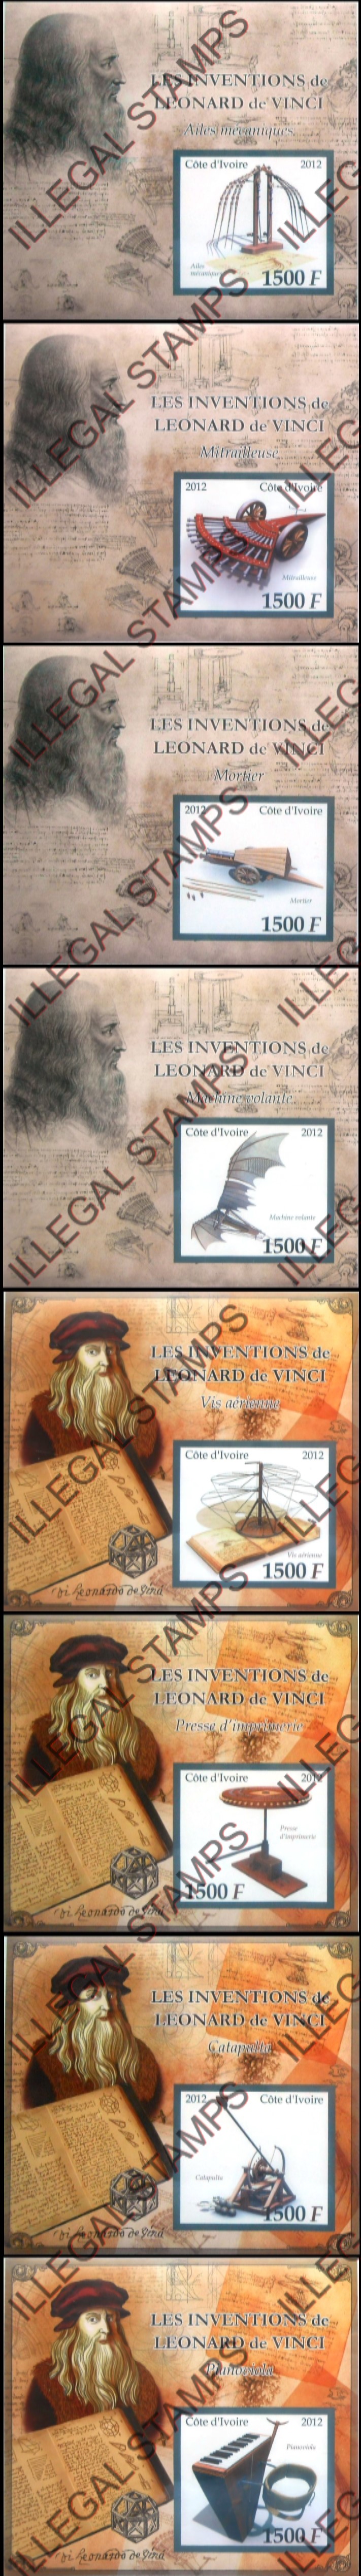 Ivory Coast 2012 Leonard de Vinci Illegal Stamp Souvenir Sheets of 1